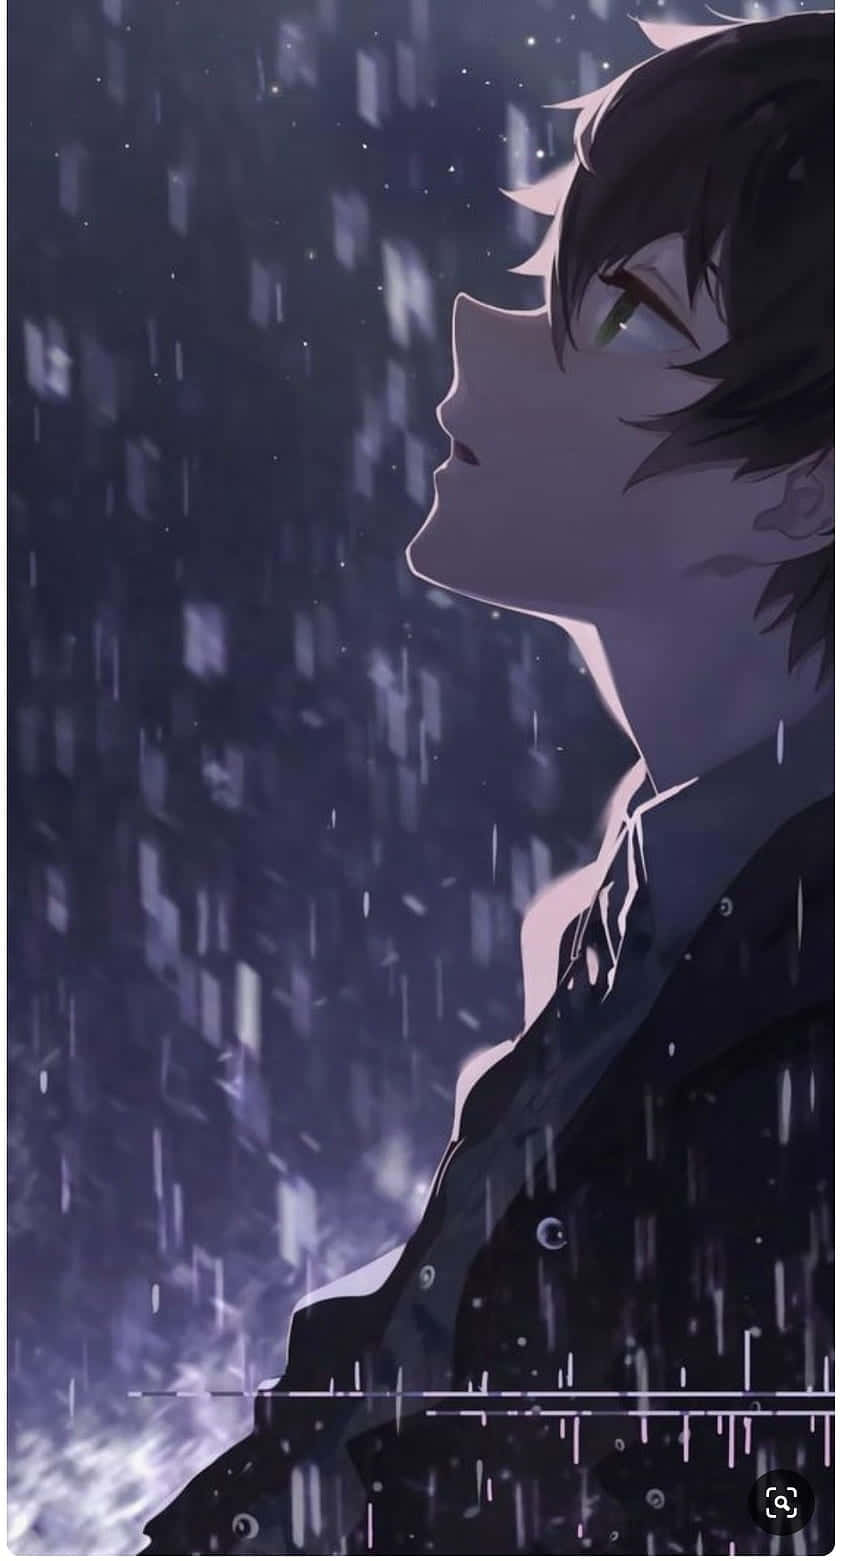 A Dark Anime Boy Madly Holding a Sword Wallpaper